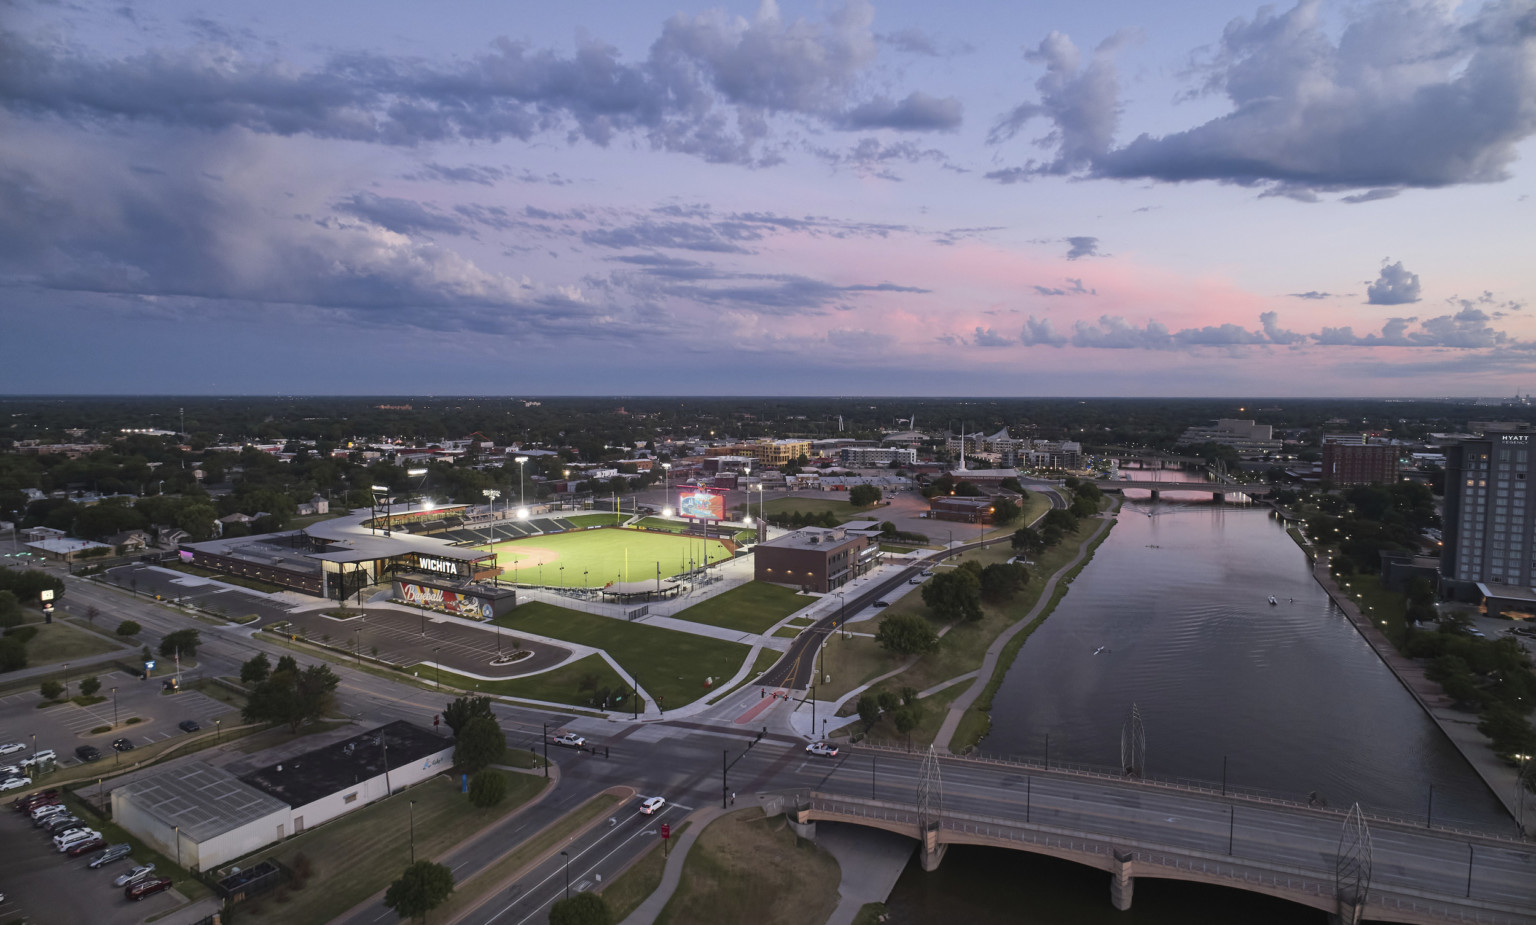 Corner view of the stadium from above the Arkansas River. Baseball field is illuminated with stadium lights